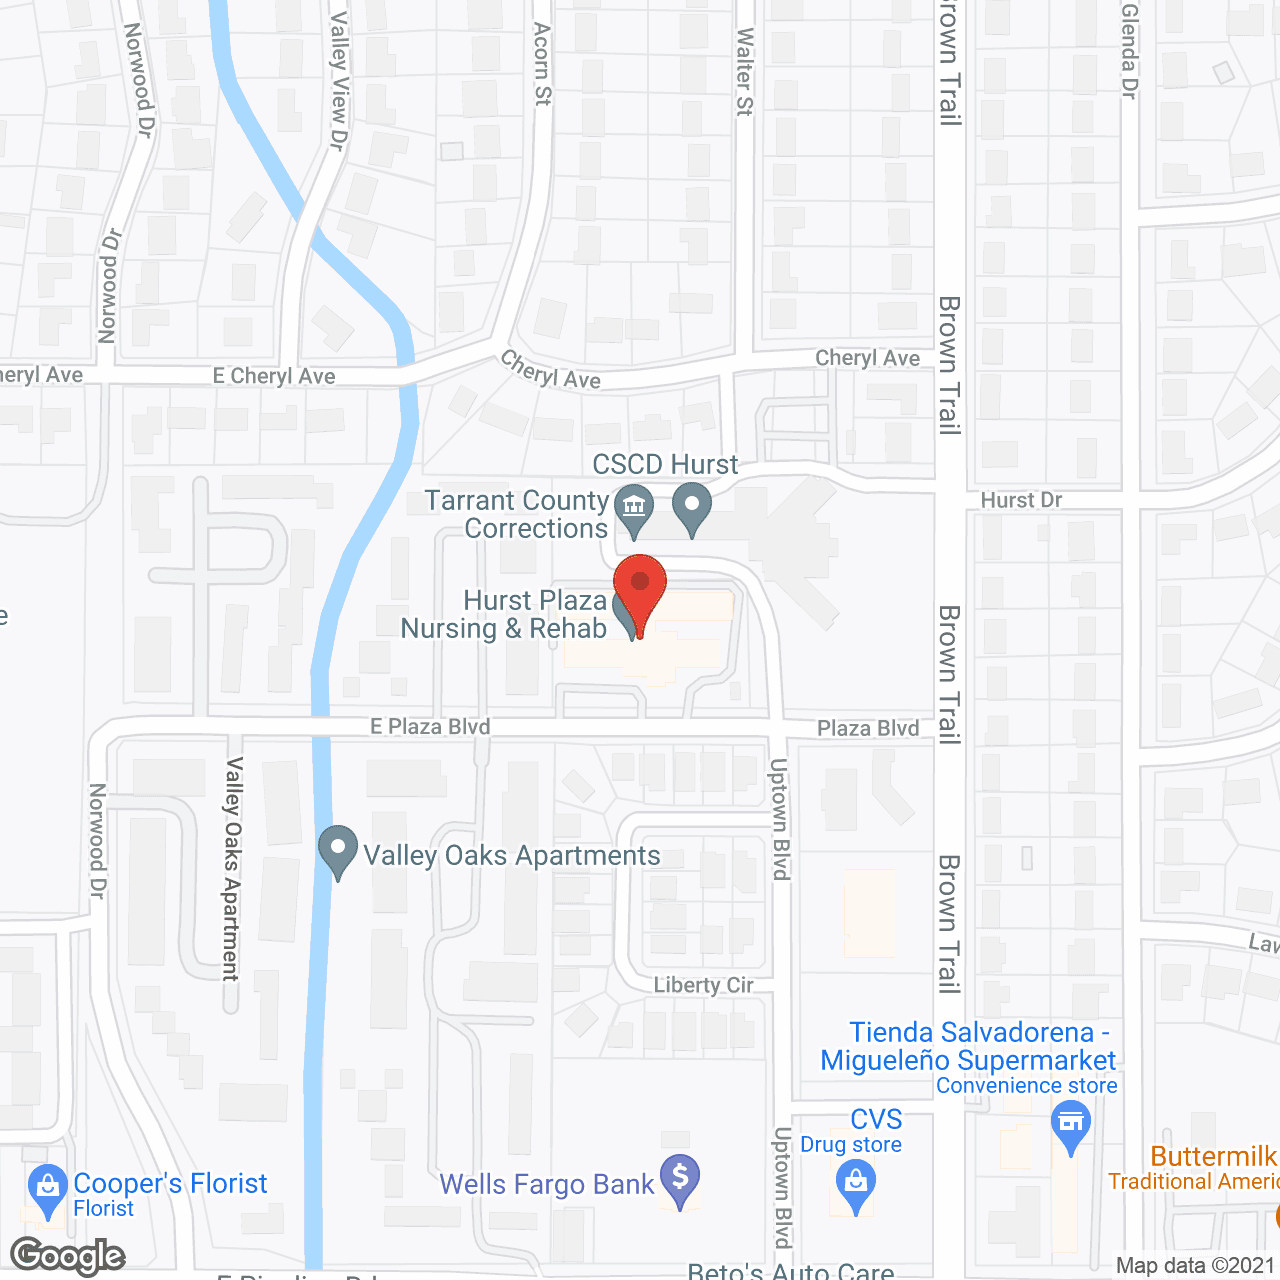 Hurst Plaza Nursing and Rehabilitation Center in google map